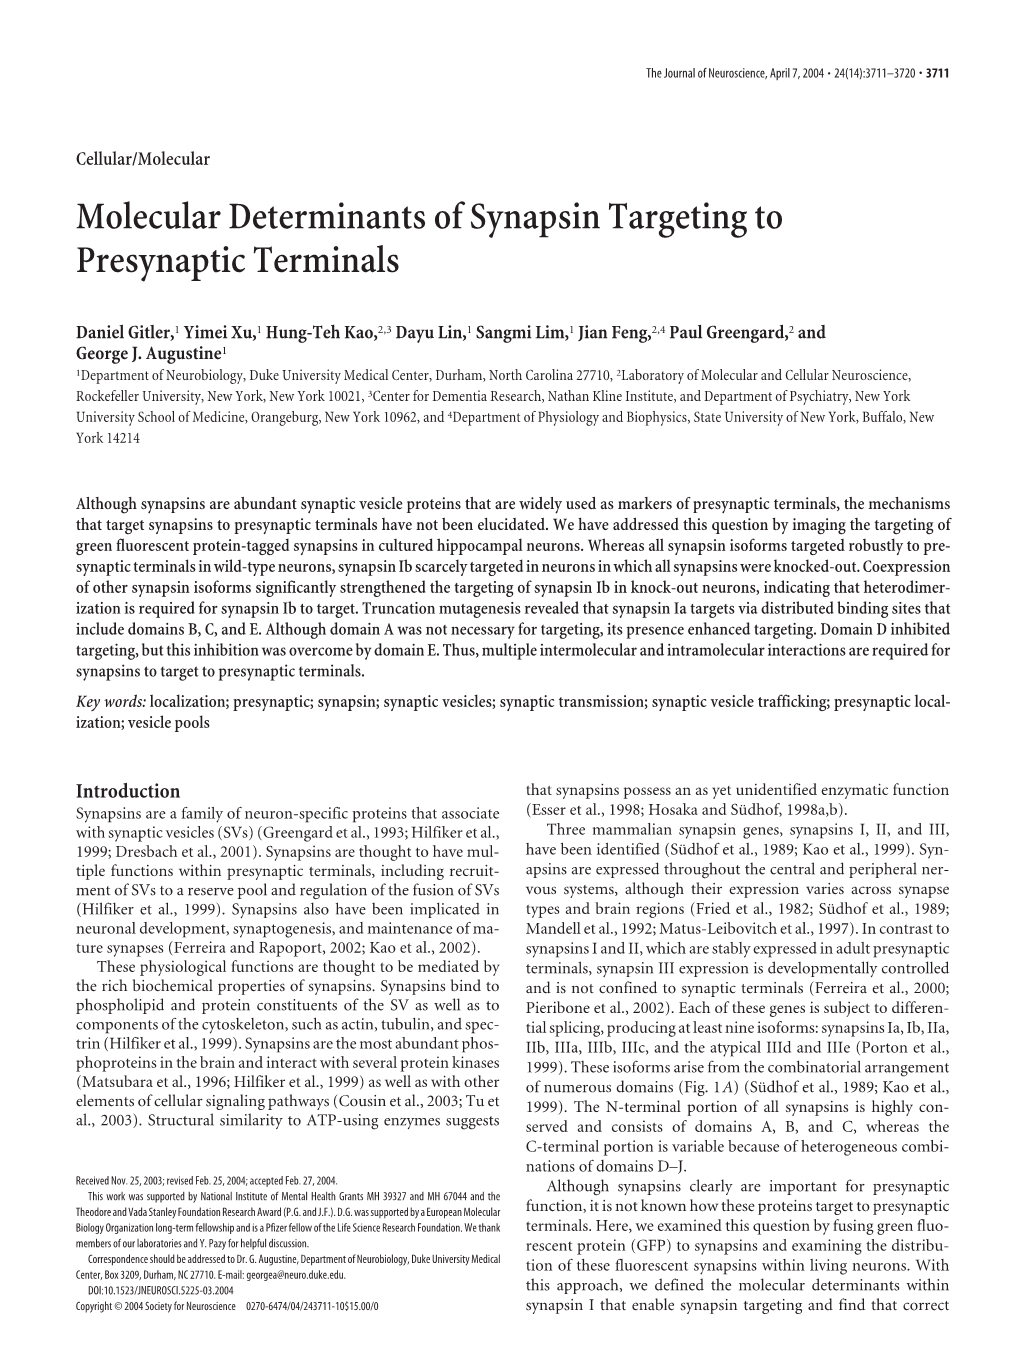 Molecular Determinants of Synapsin Targeting to Presynaptic Terminals